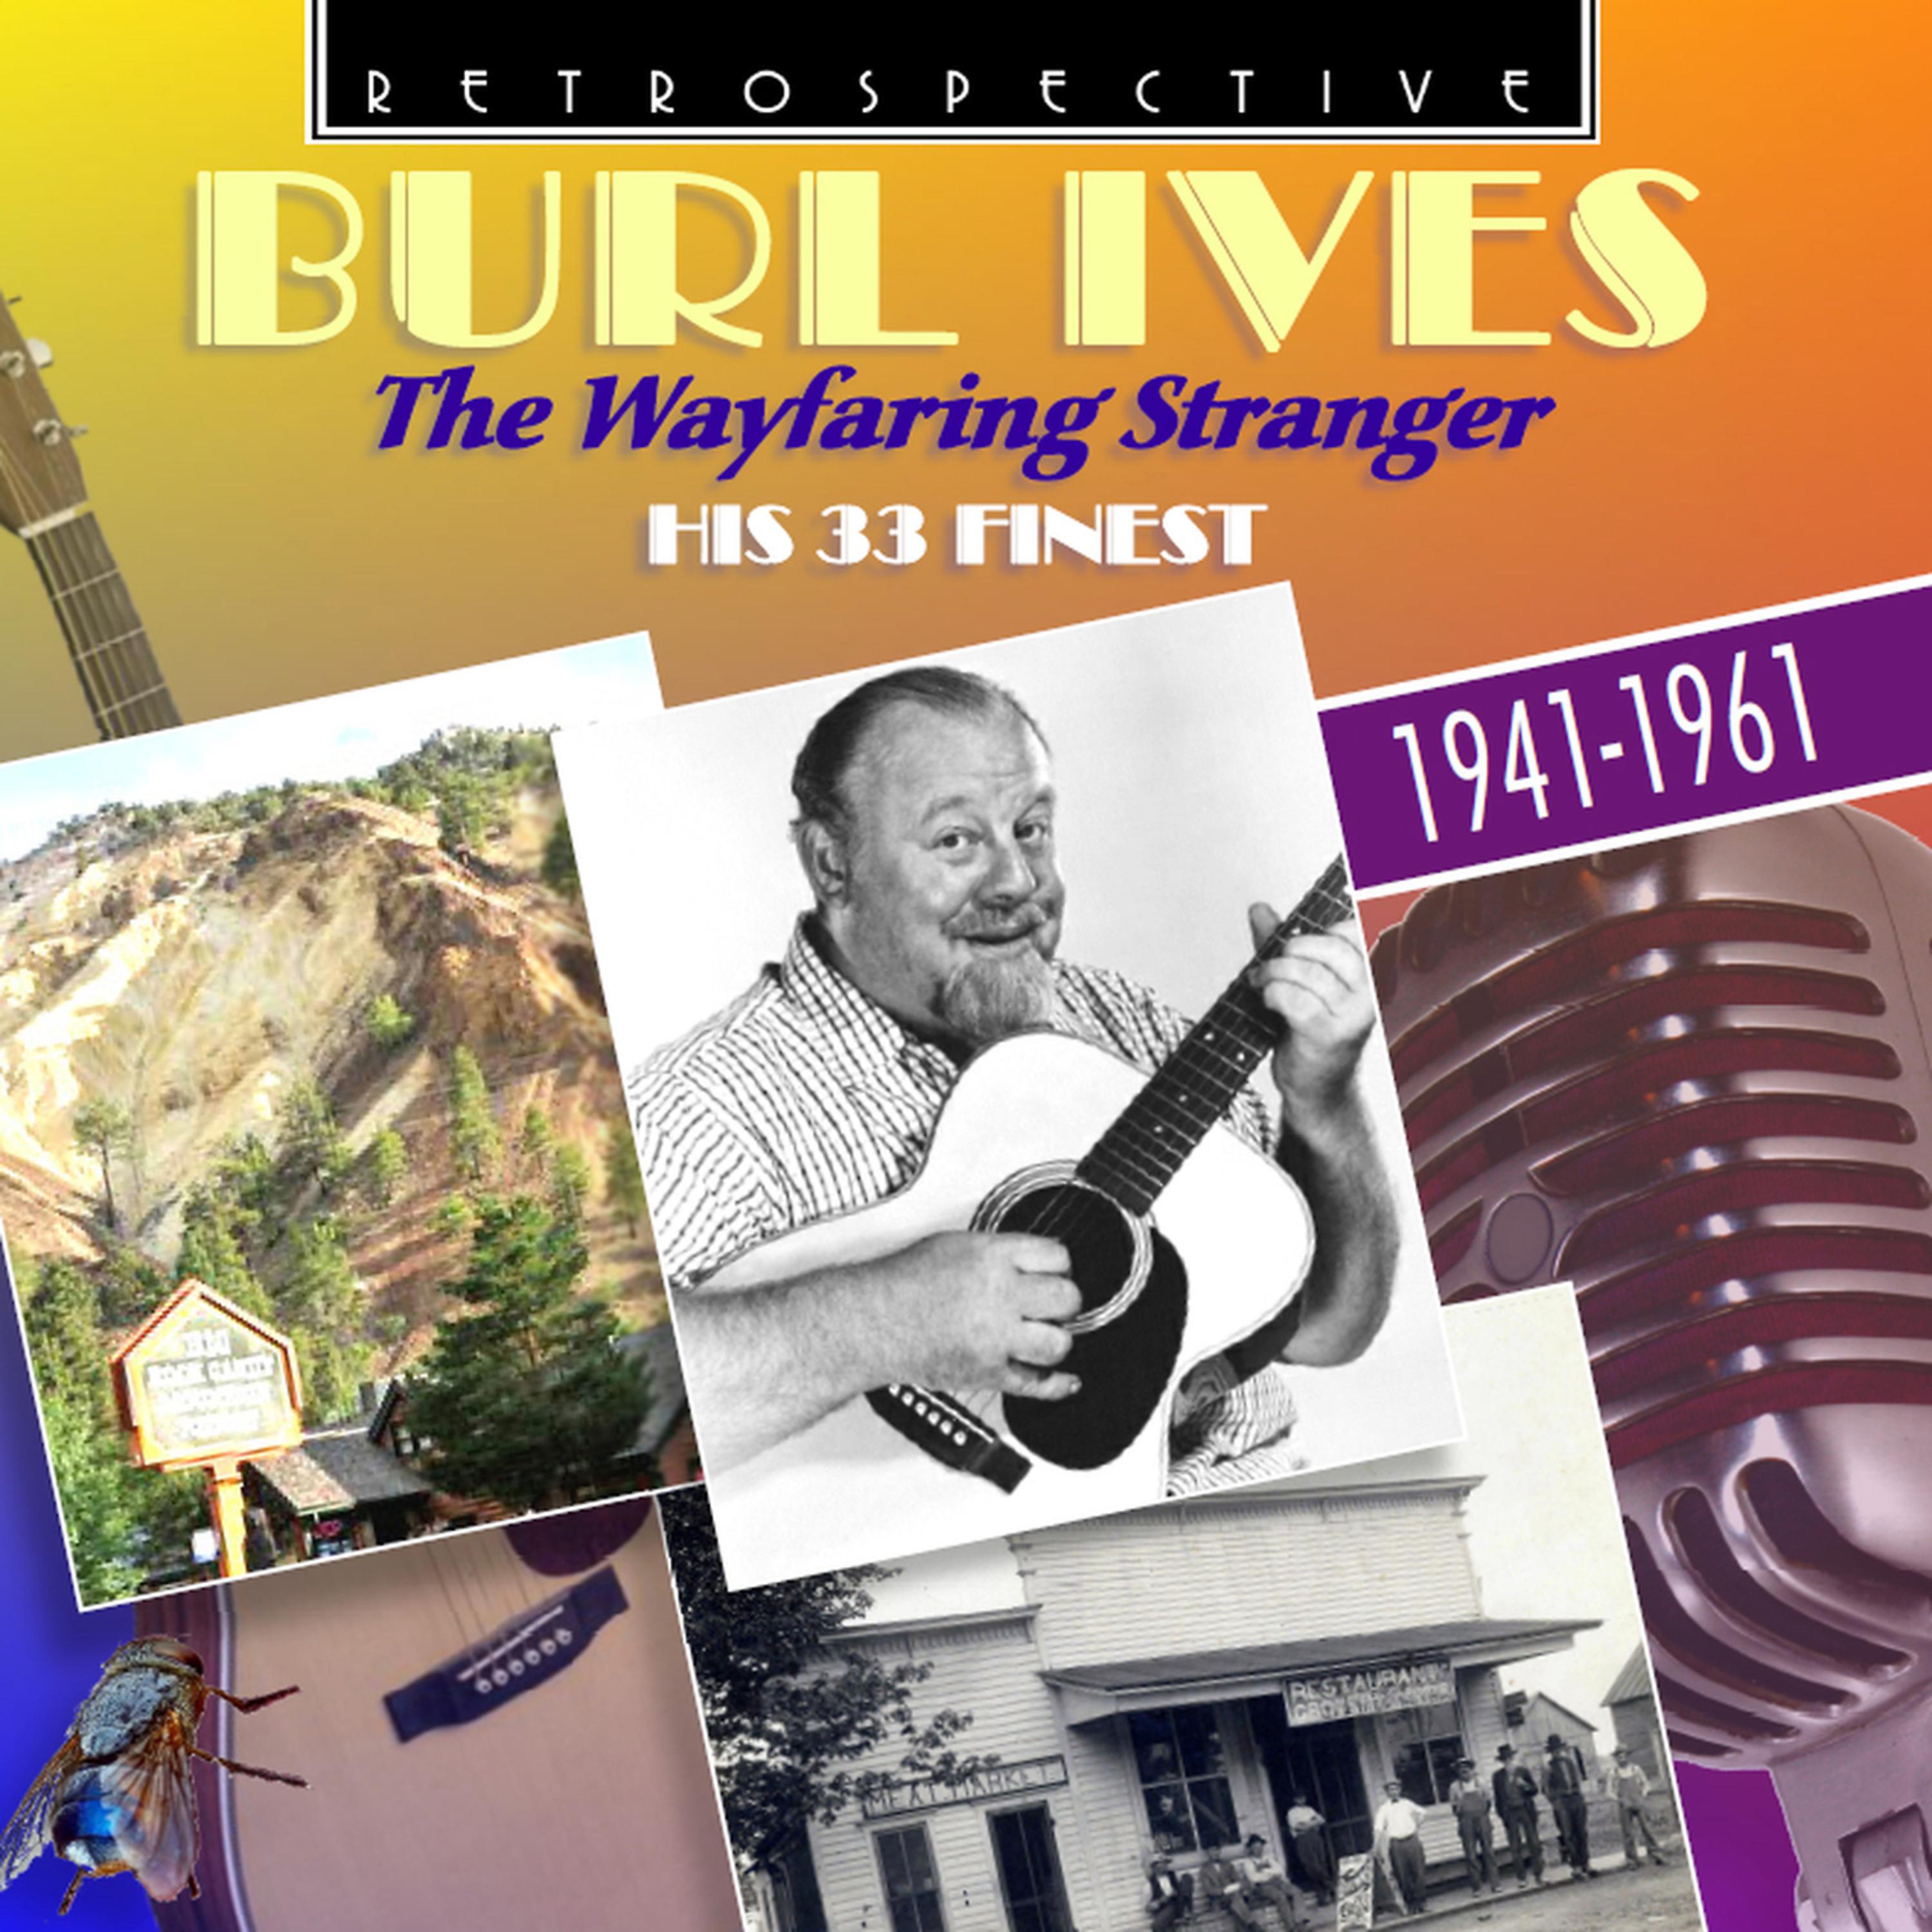 Постер альбома Burl Ives "The Wayfaring Stranger"